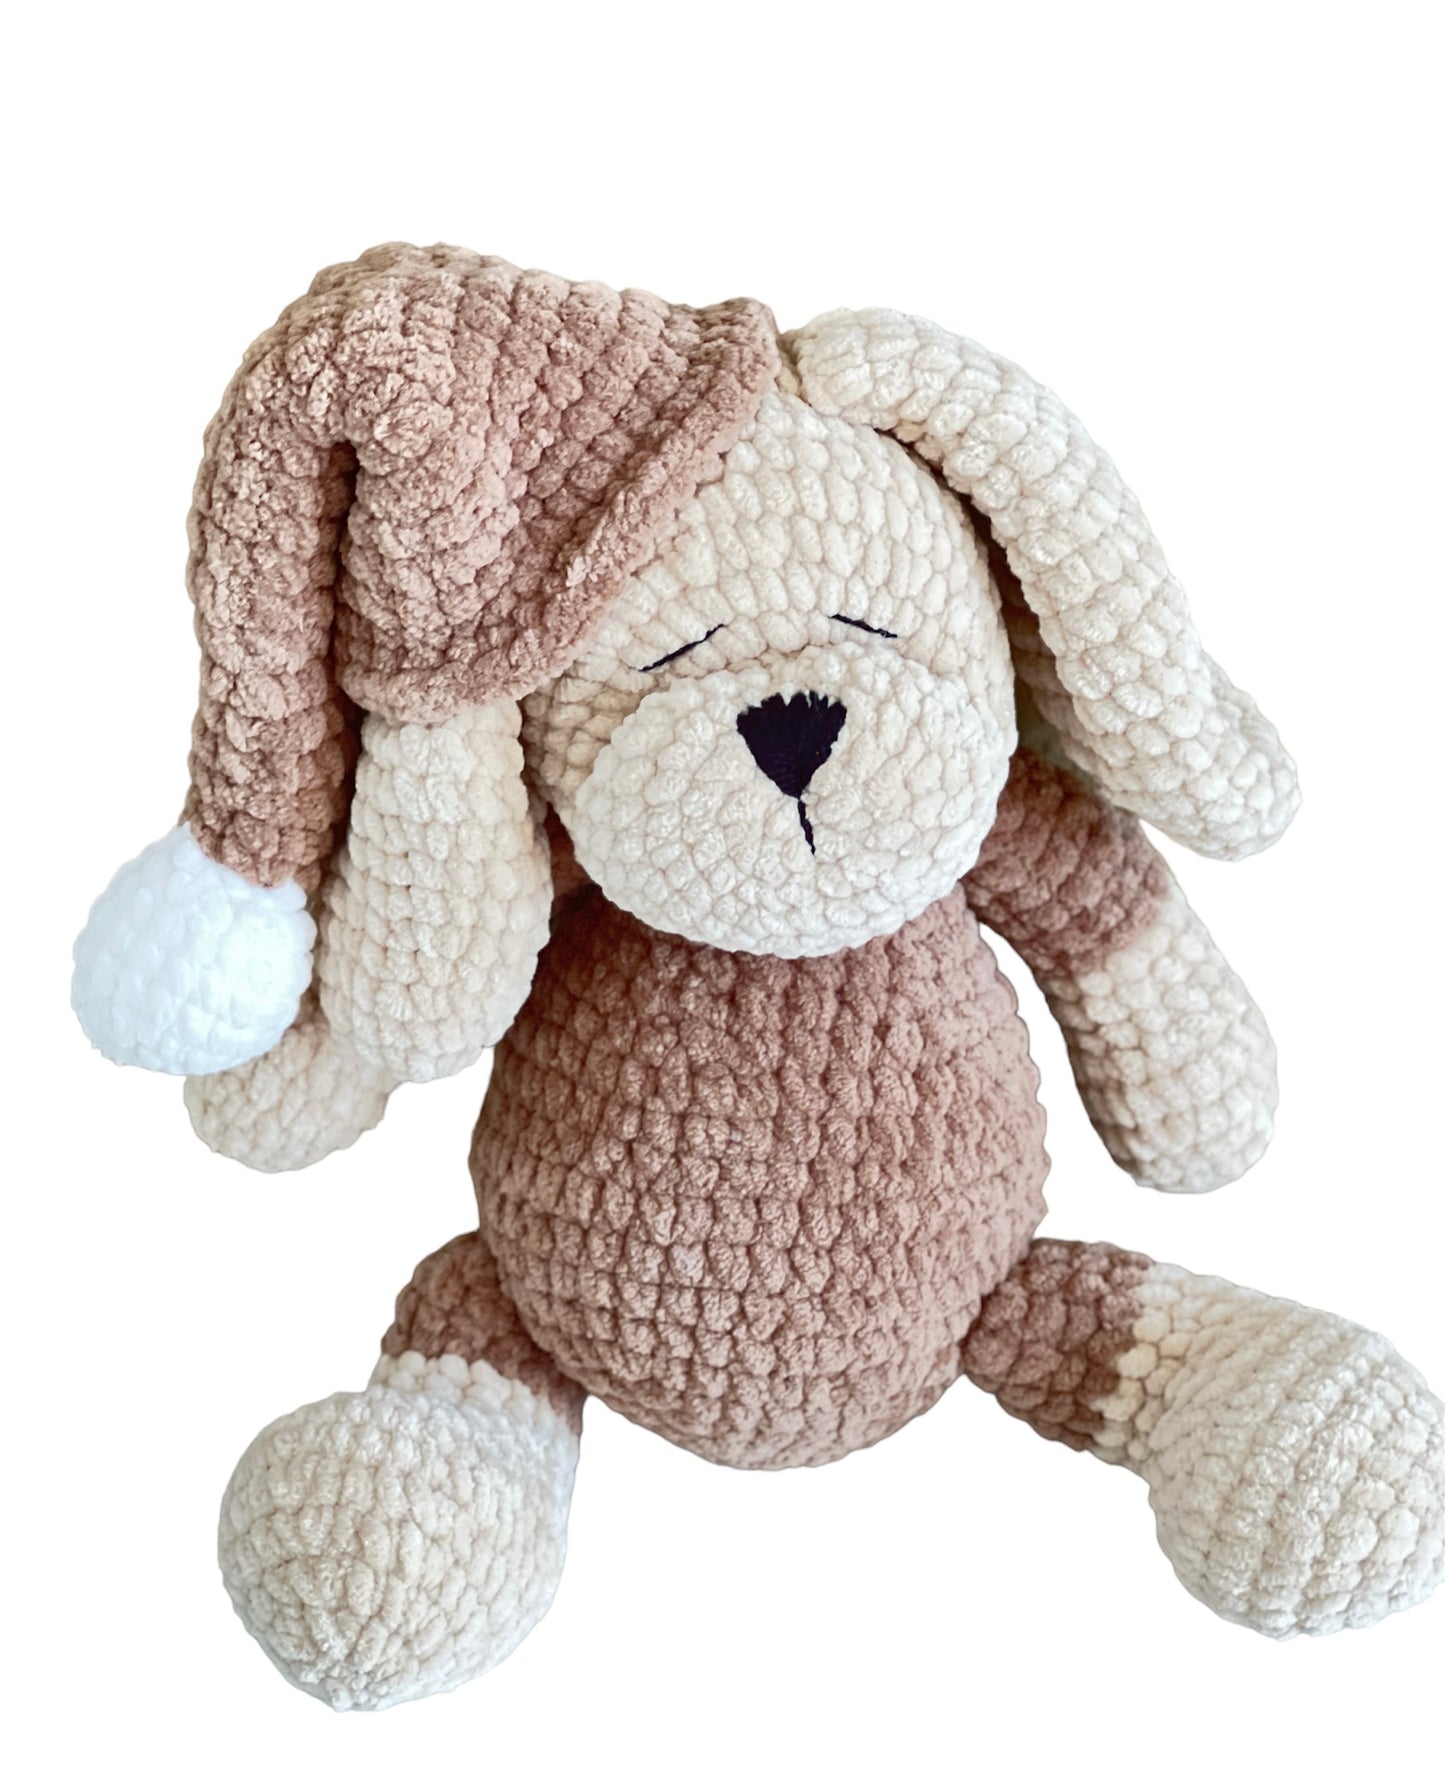 Crochet Dog, Crochet Puppy Toy, Amigurumi, Plushie, Dog Plushie, Crochet stuffed dog, Baby dog toy